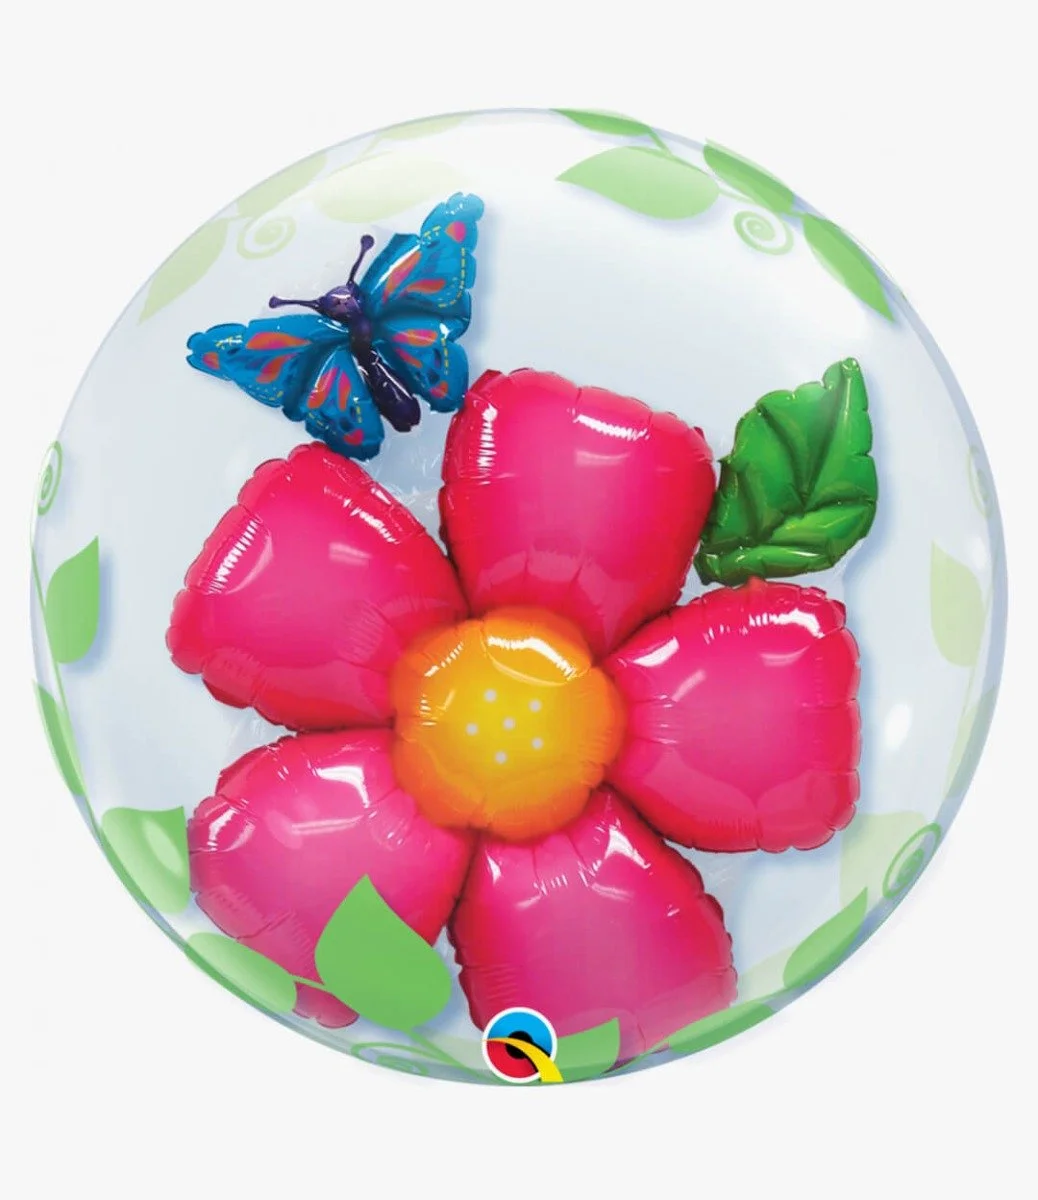 Flower printed balloon